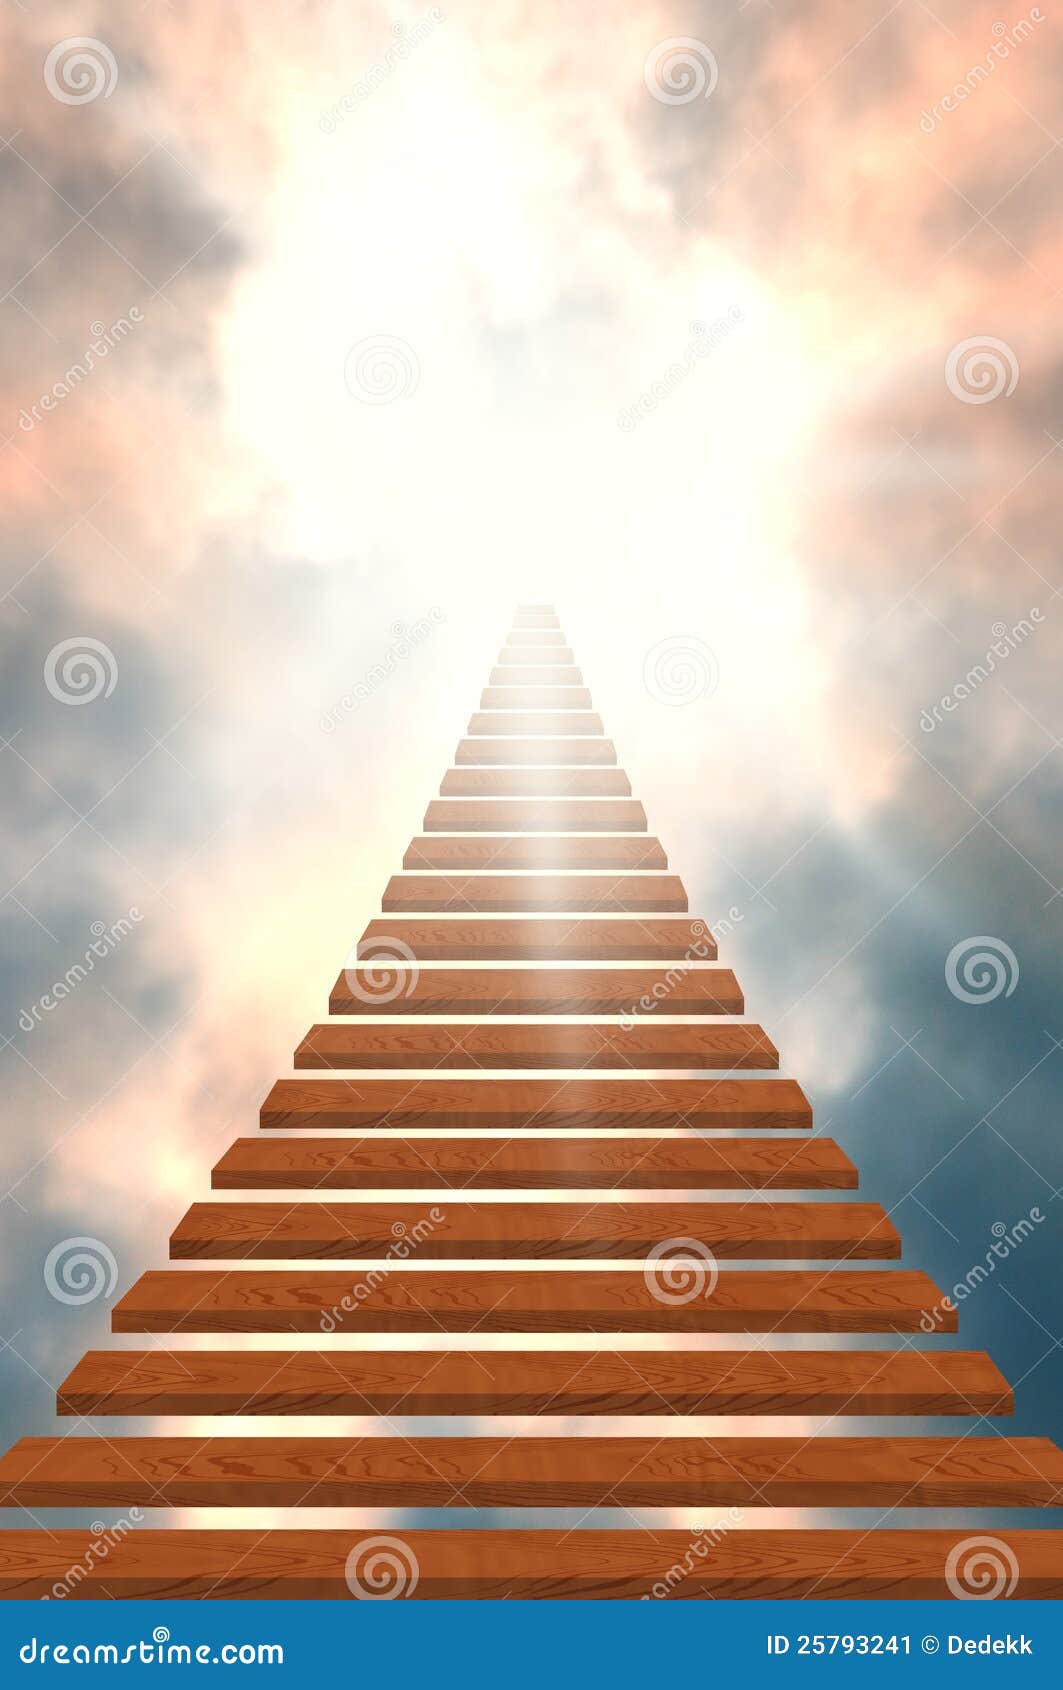 stairway to heaven/success